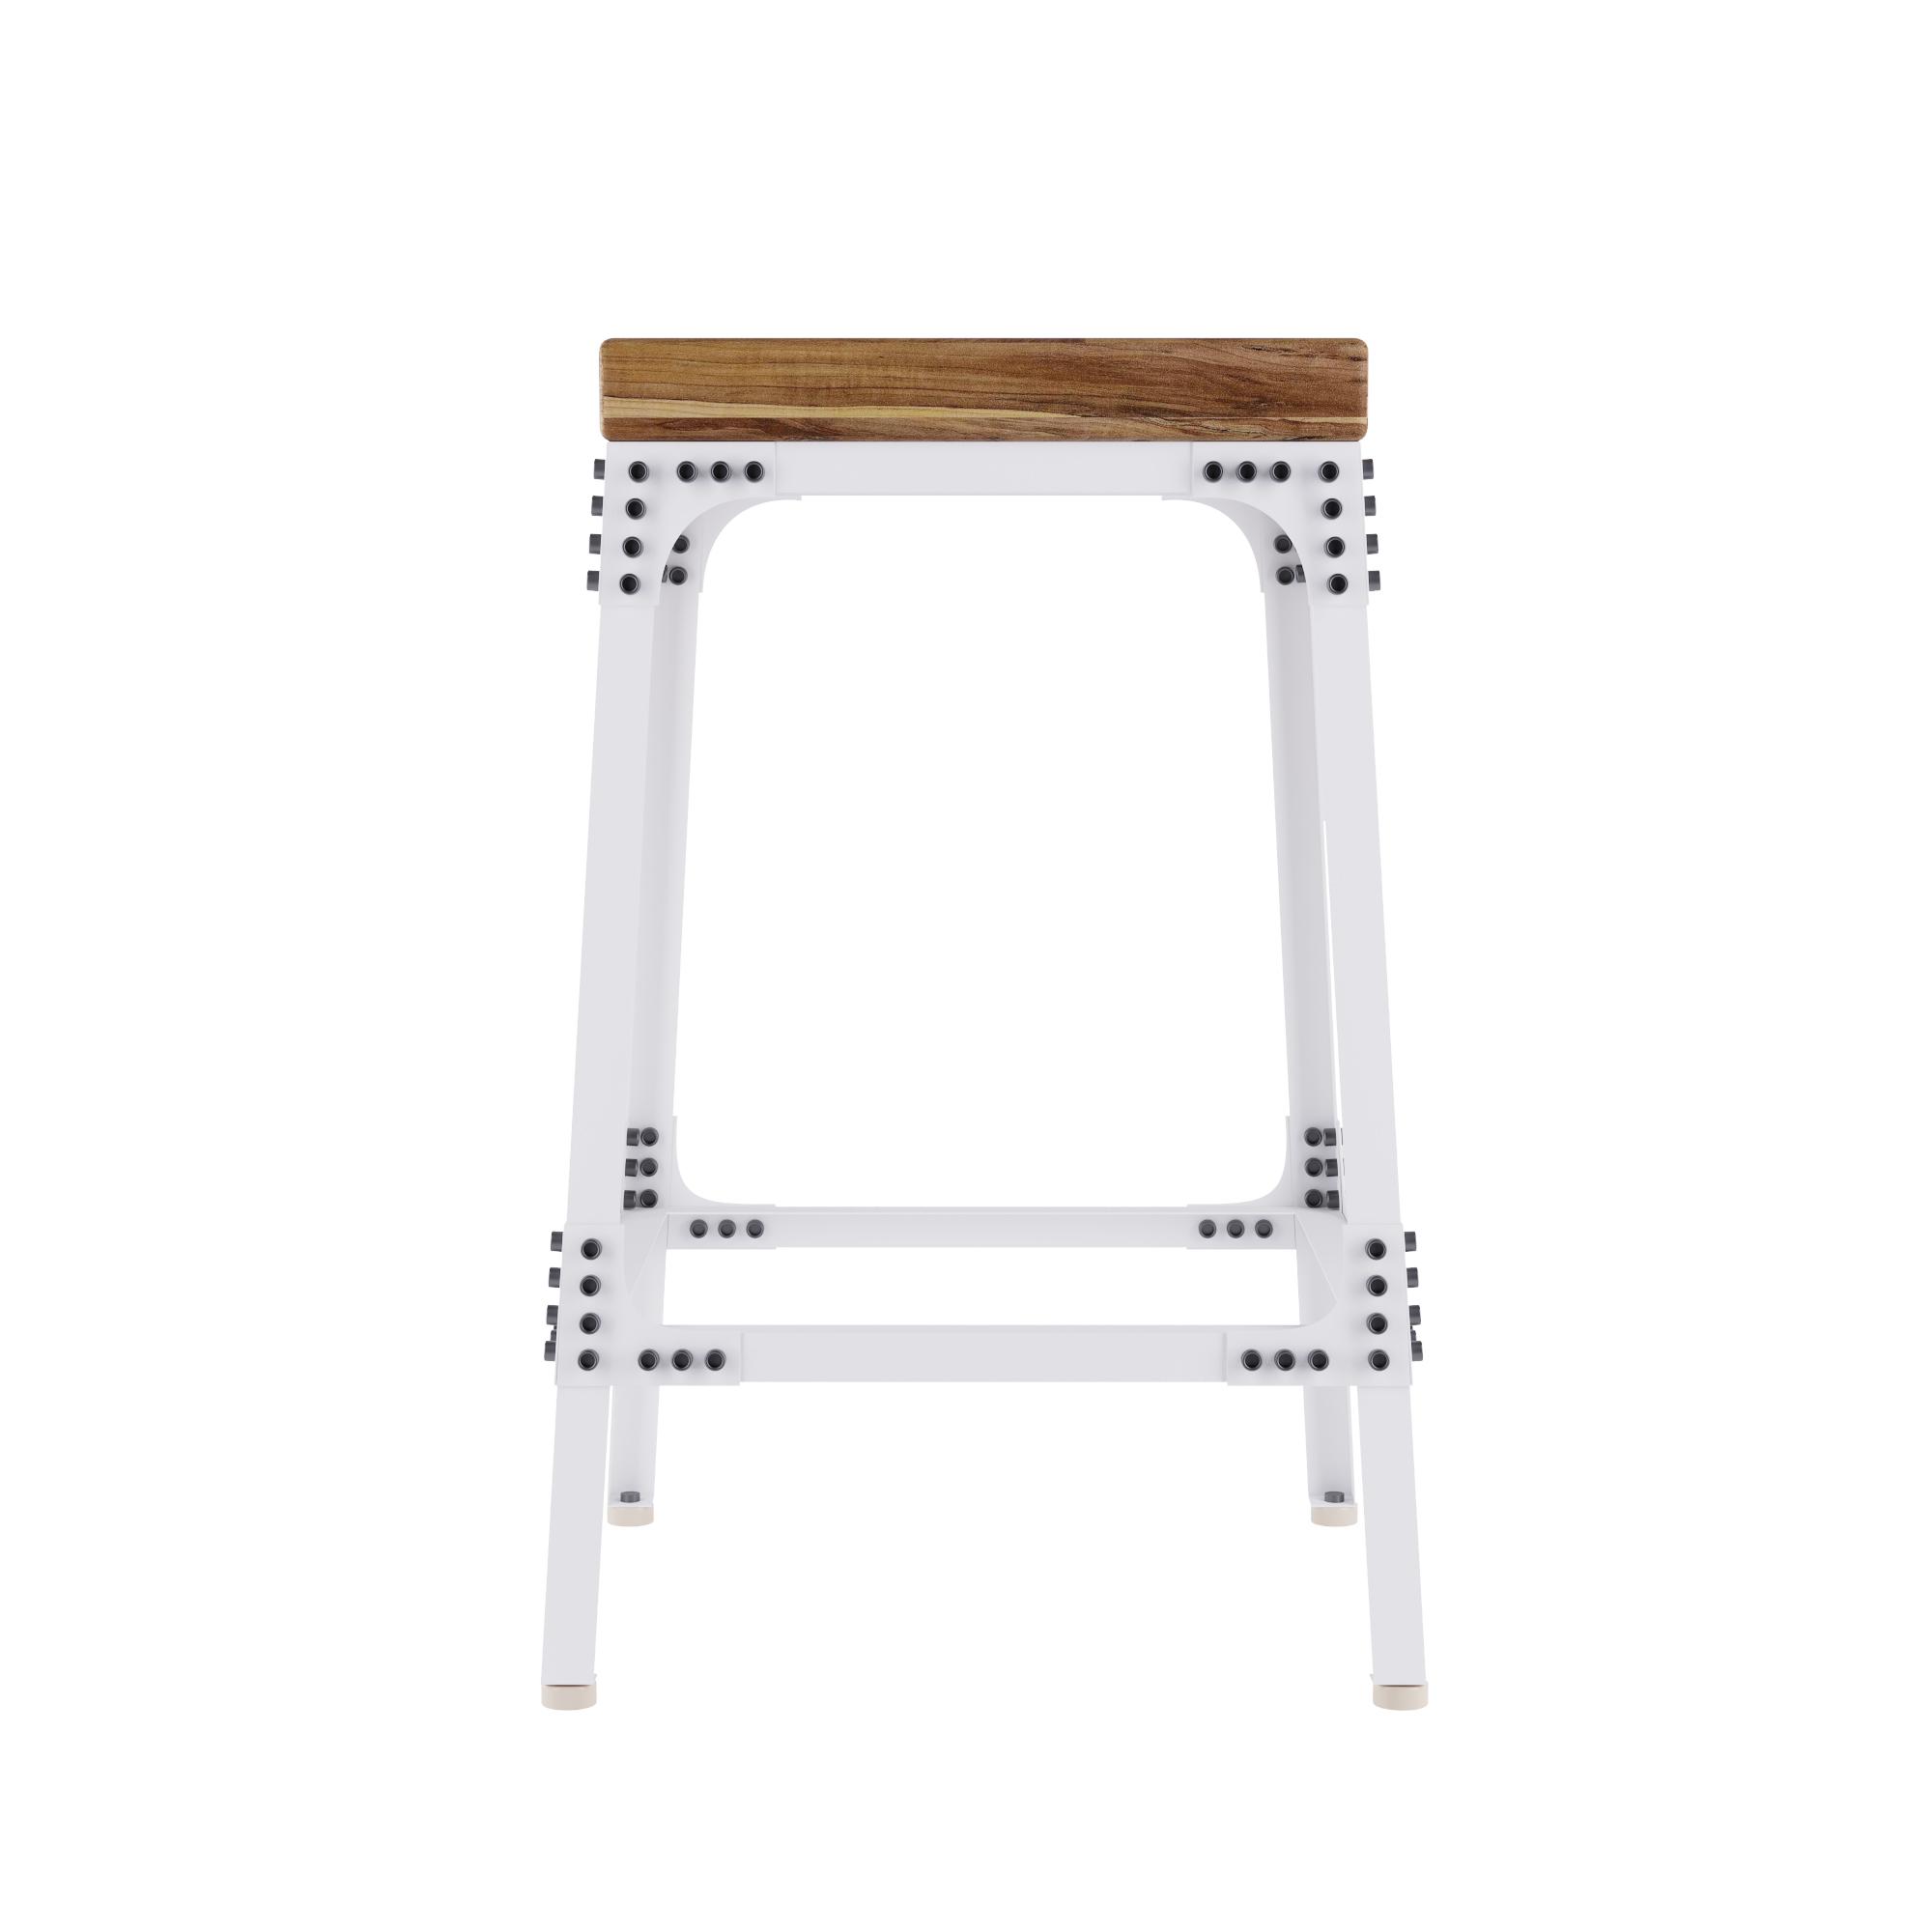 Hexagonal D stool, SKU. 3693 by Pikartlights 3d model